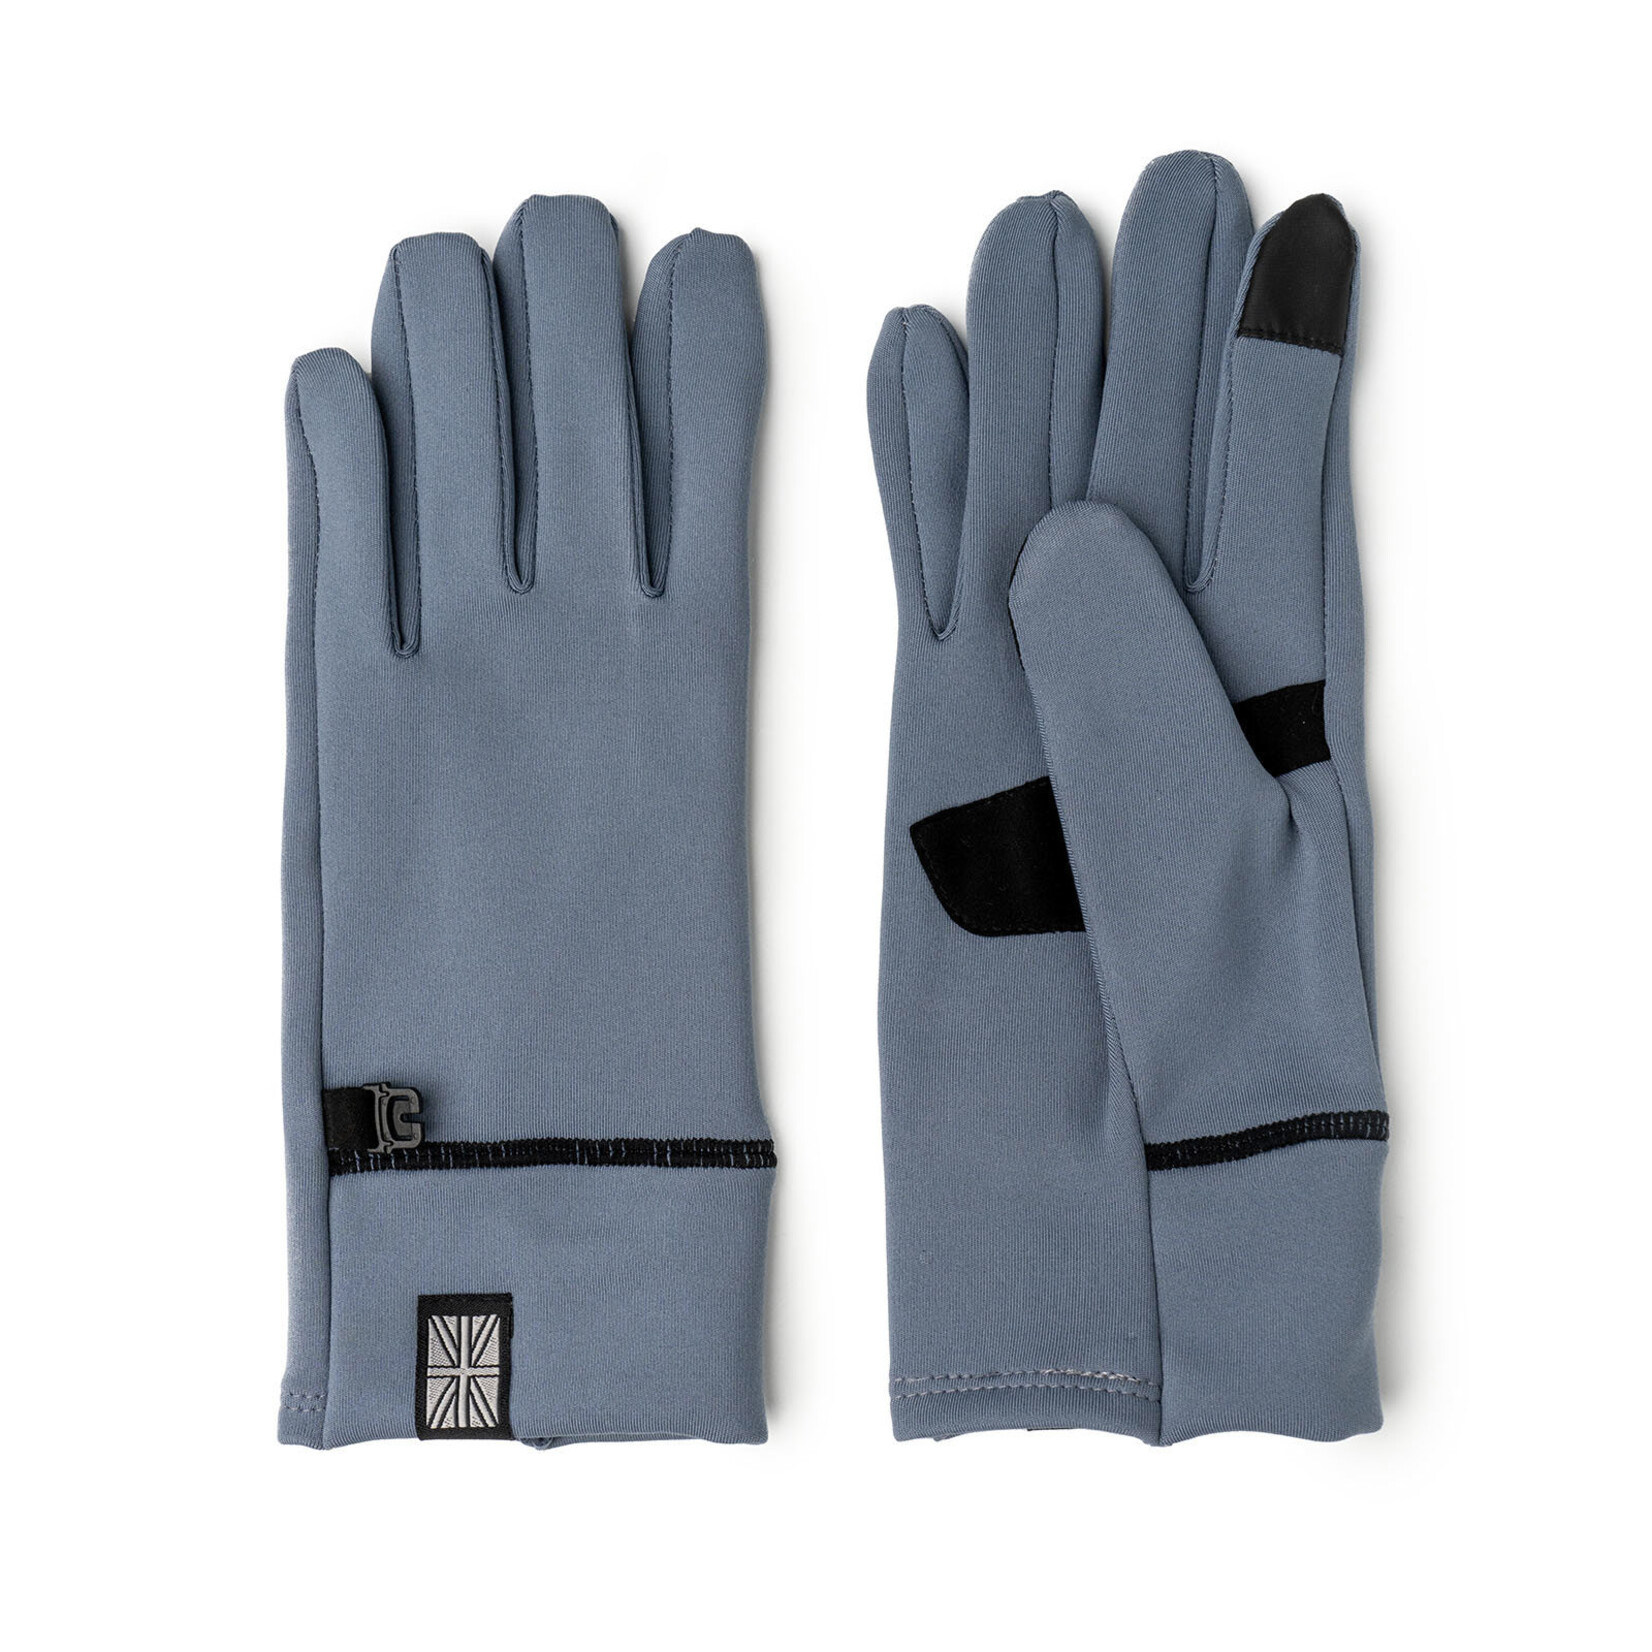 Britt's Knits - Thermal Tech Gloves - Blue